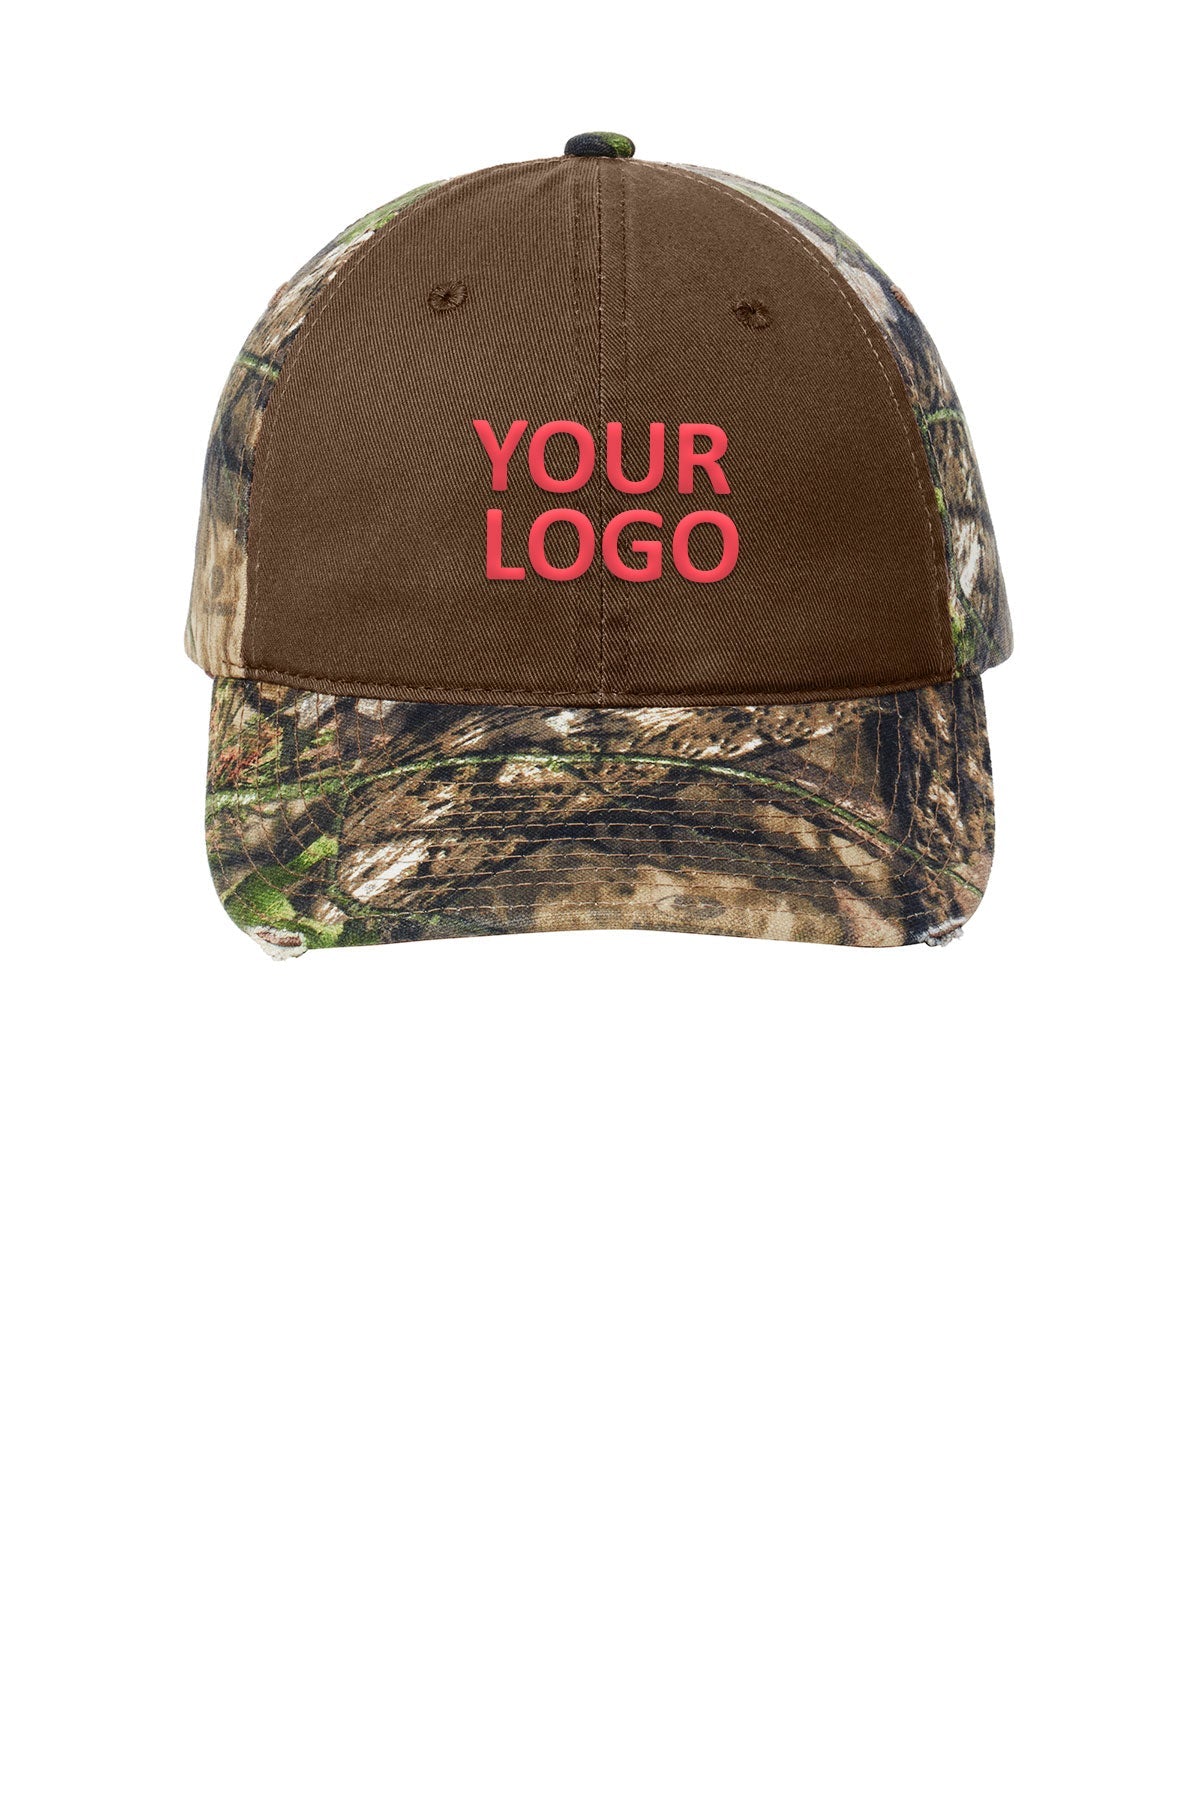 Camo Caps & Hats, Custom Branding Caps